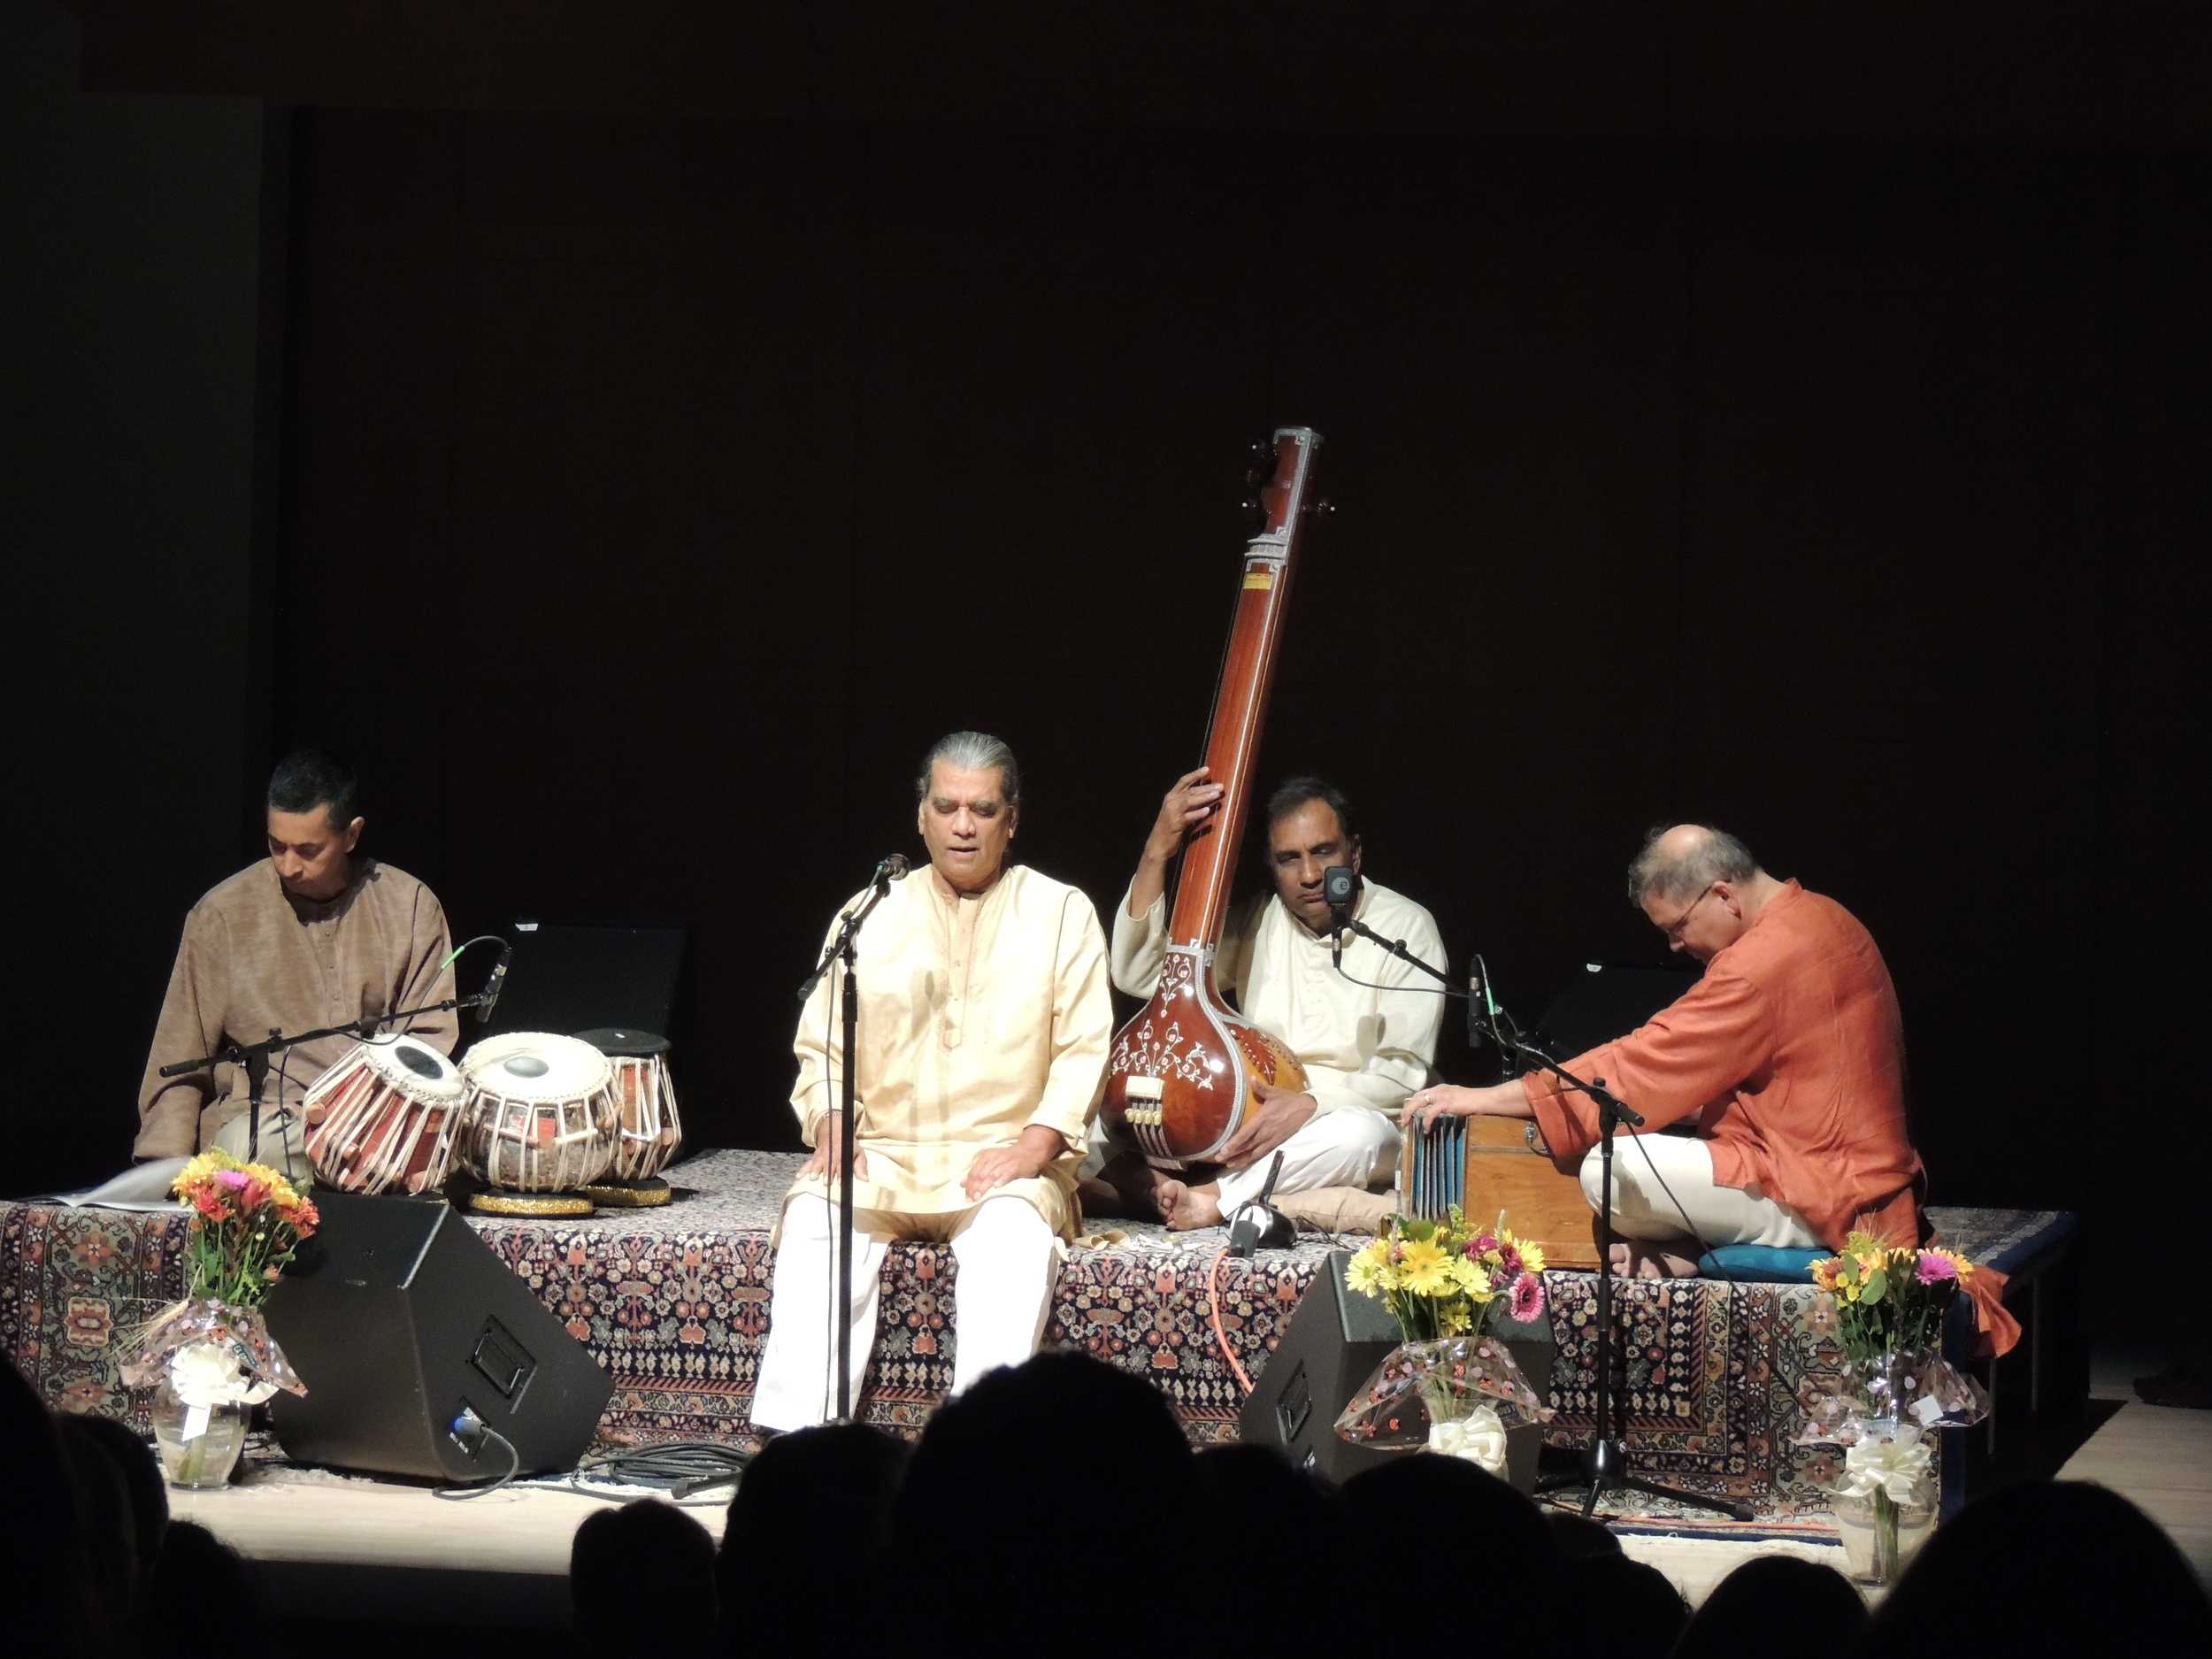 STAR // Alyssa JamesProfessor of ethnomusicology, Laxmi G. Tewari, performed traditional Indian folk music at the Green Music Center on Saturday.